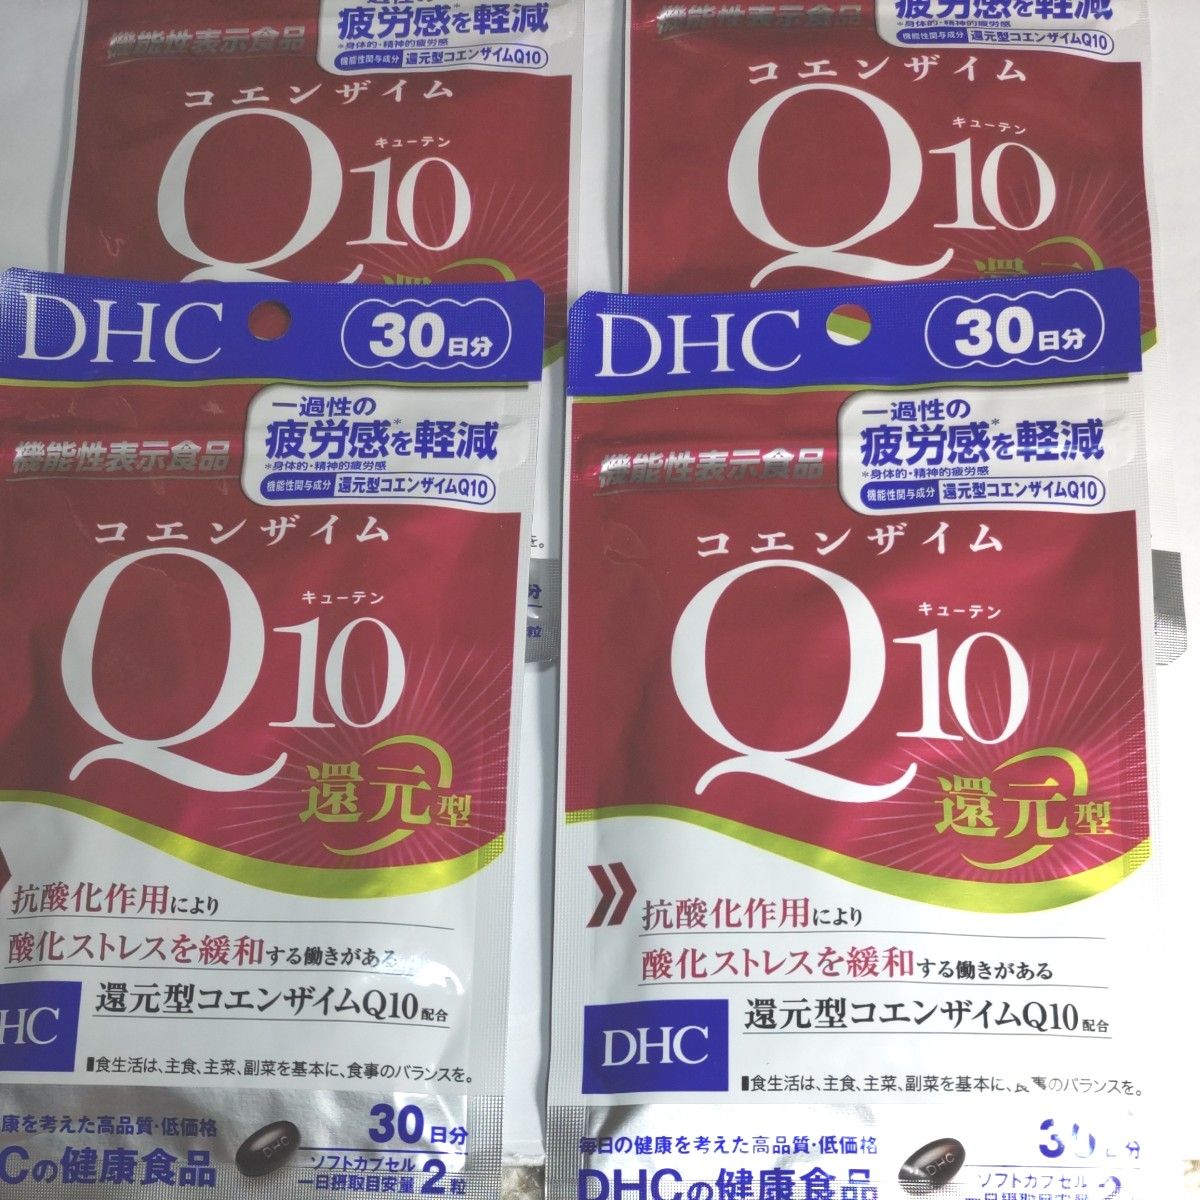  DHC コエンザイムQ10 還元型 30日分 【機能性表示食品】   4袋